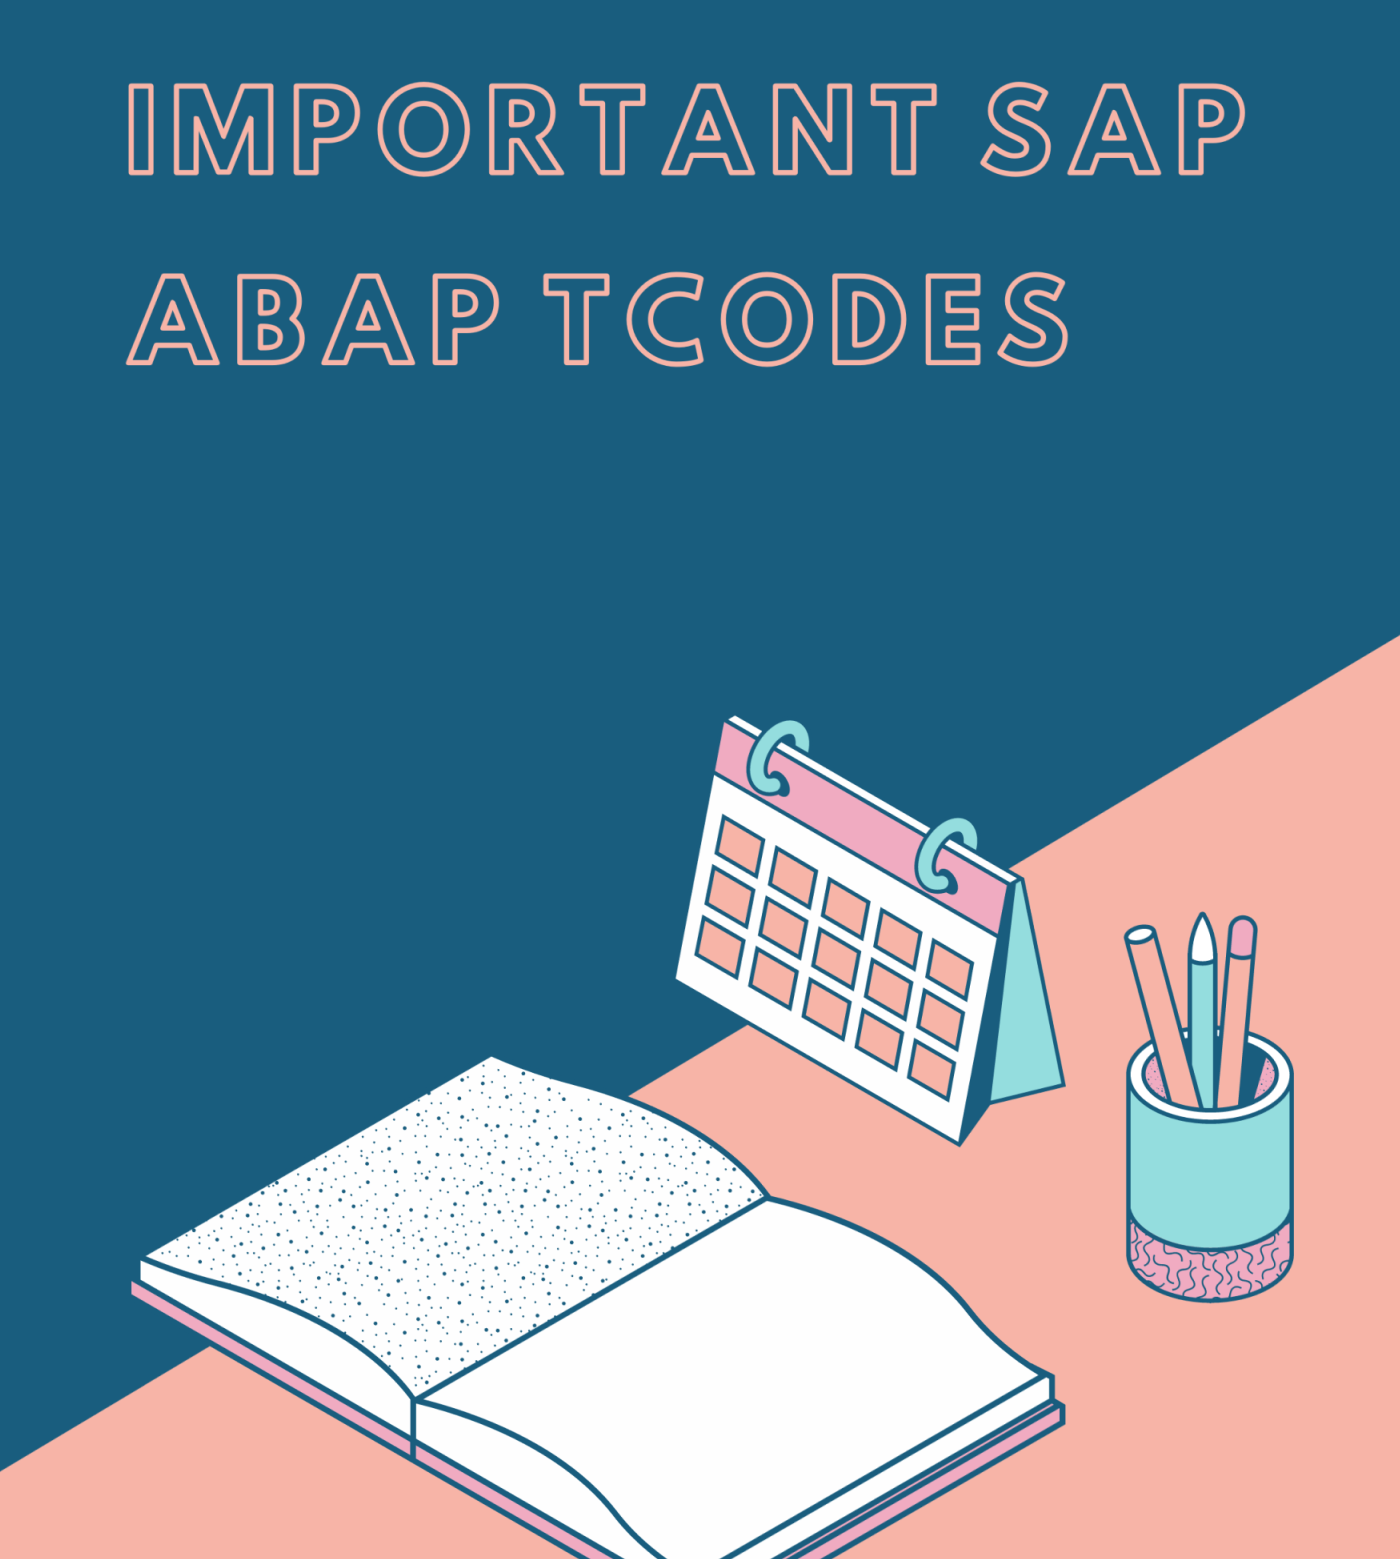 SAP ABAP TCODES